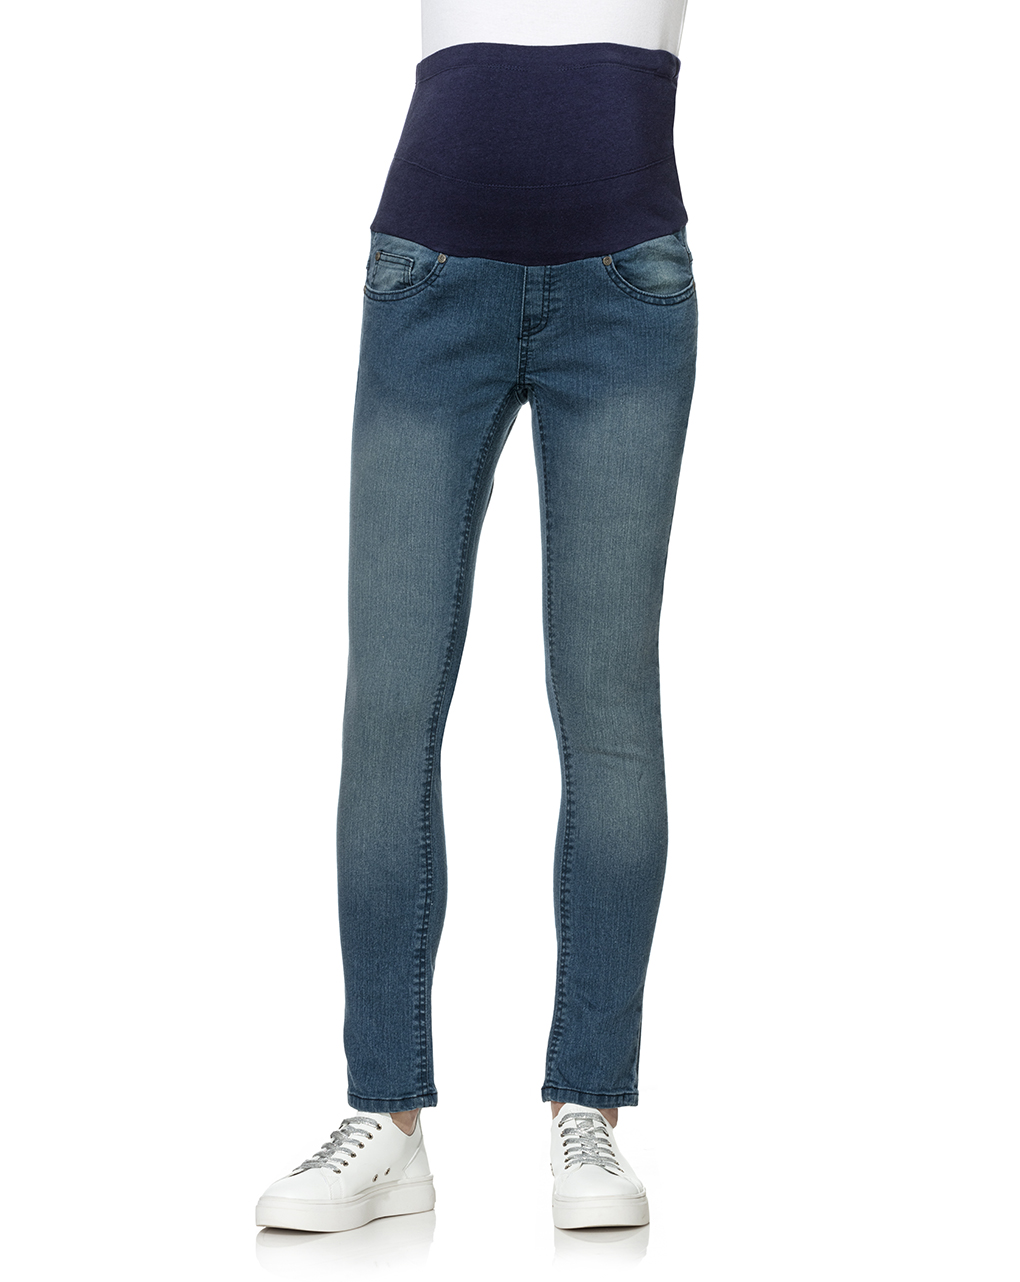 Jeans jeans com elástico alto - Prénatal